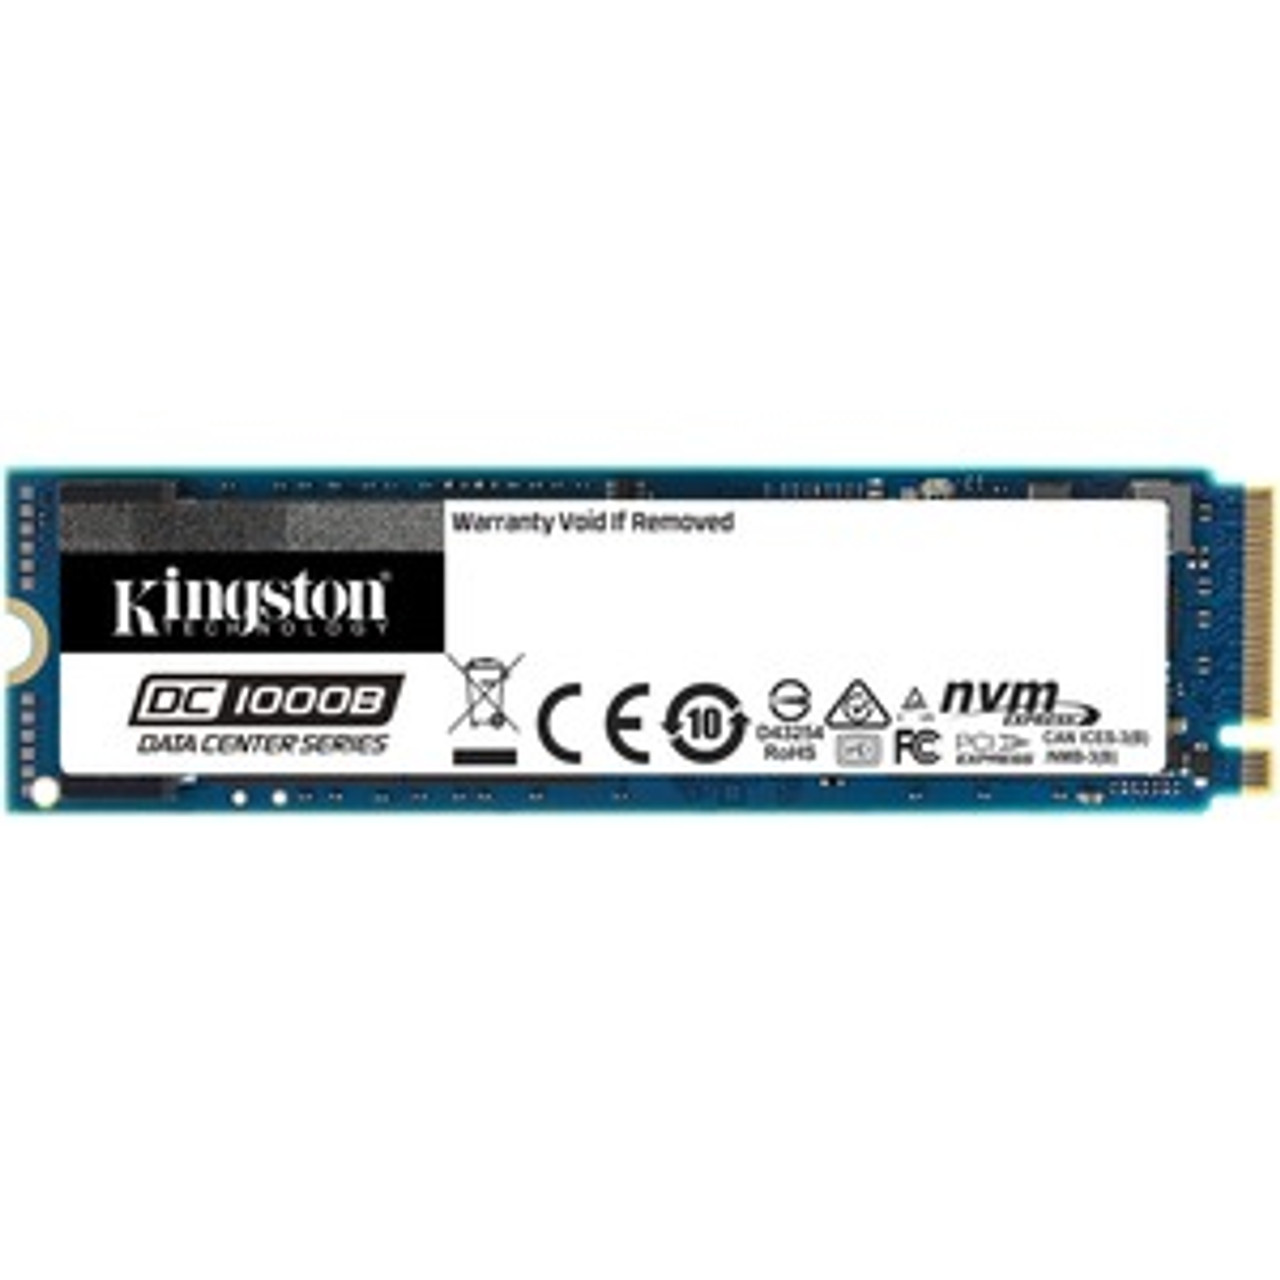 SEDC1000BM8/480G Kingston DC1000B 480GB TLC PCI Express 3.0 x4 NVMe M.2 2280 Internal Solid State Drive (SSD)